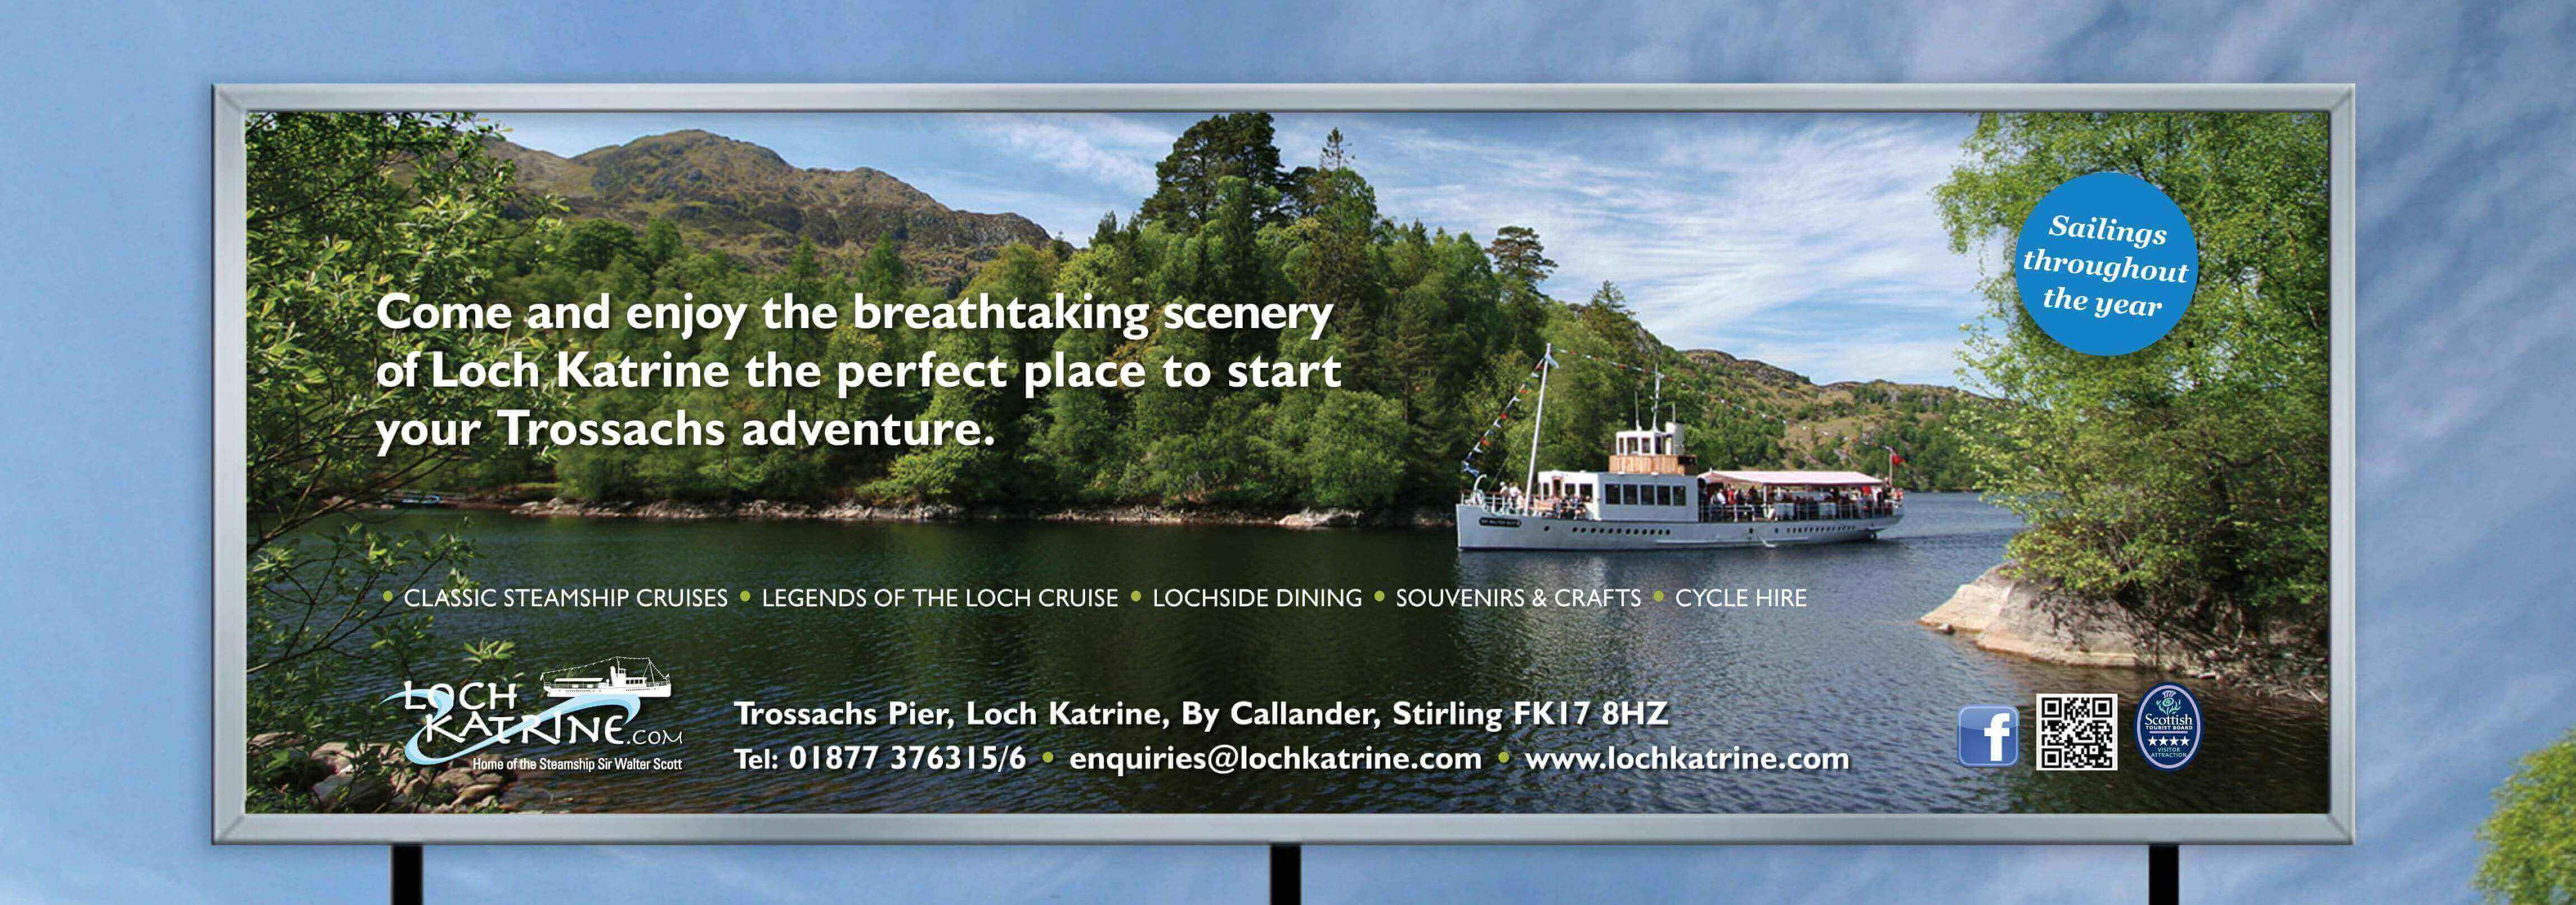 Loch Katrine Billboard designed by Glasgow-based design studio G3 Creative